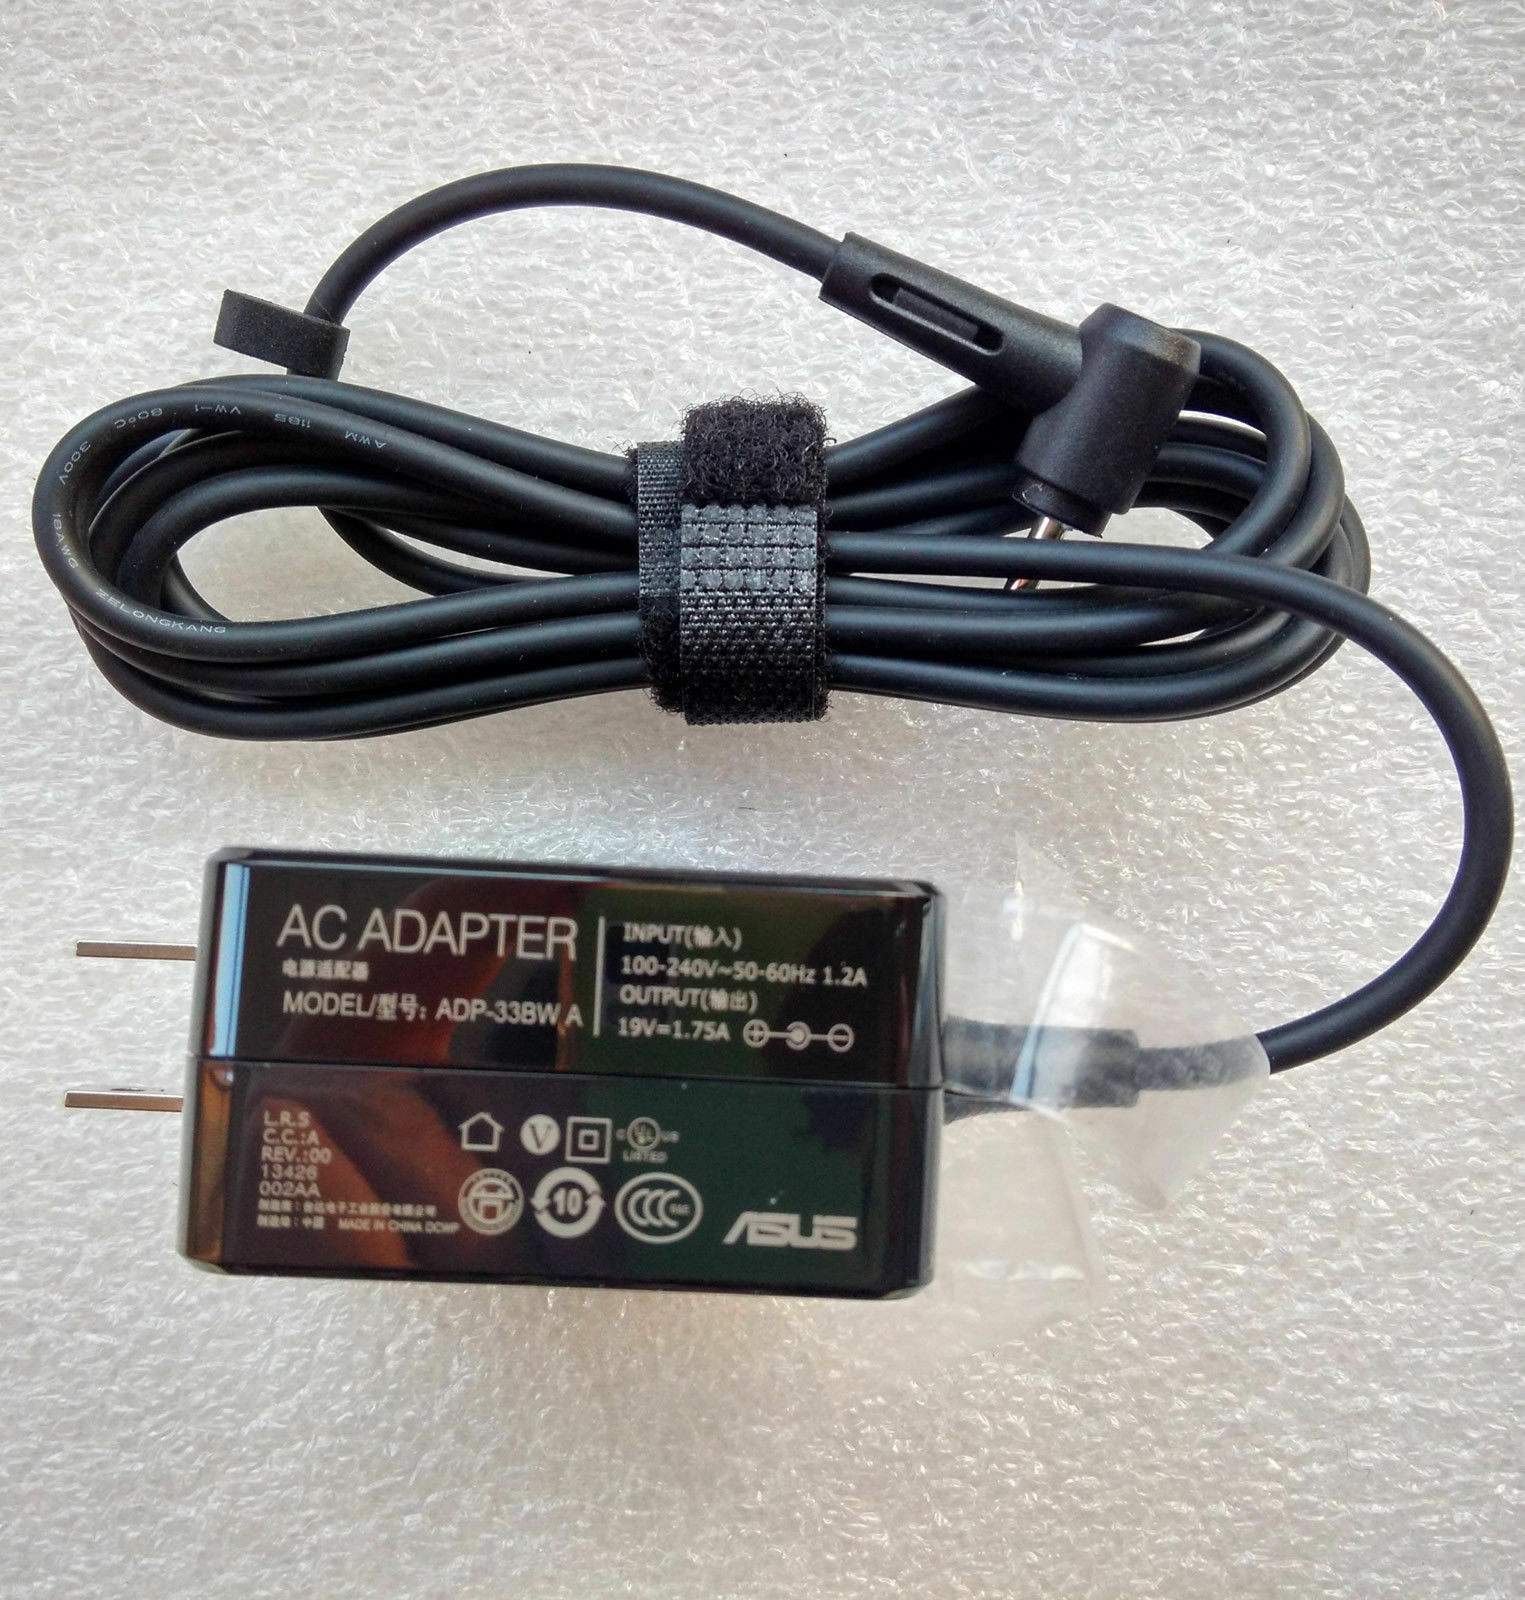 ad880026 laptop ac adapter